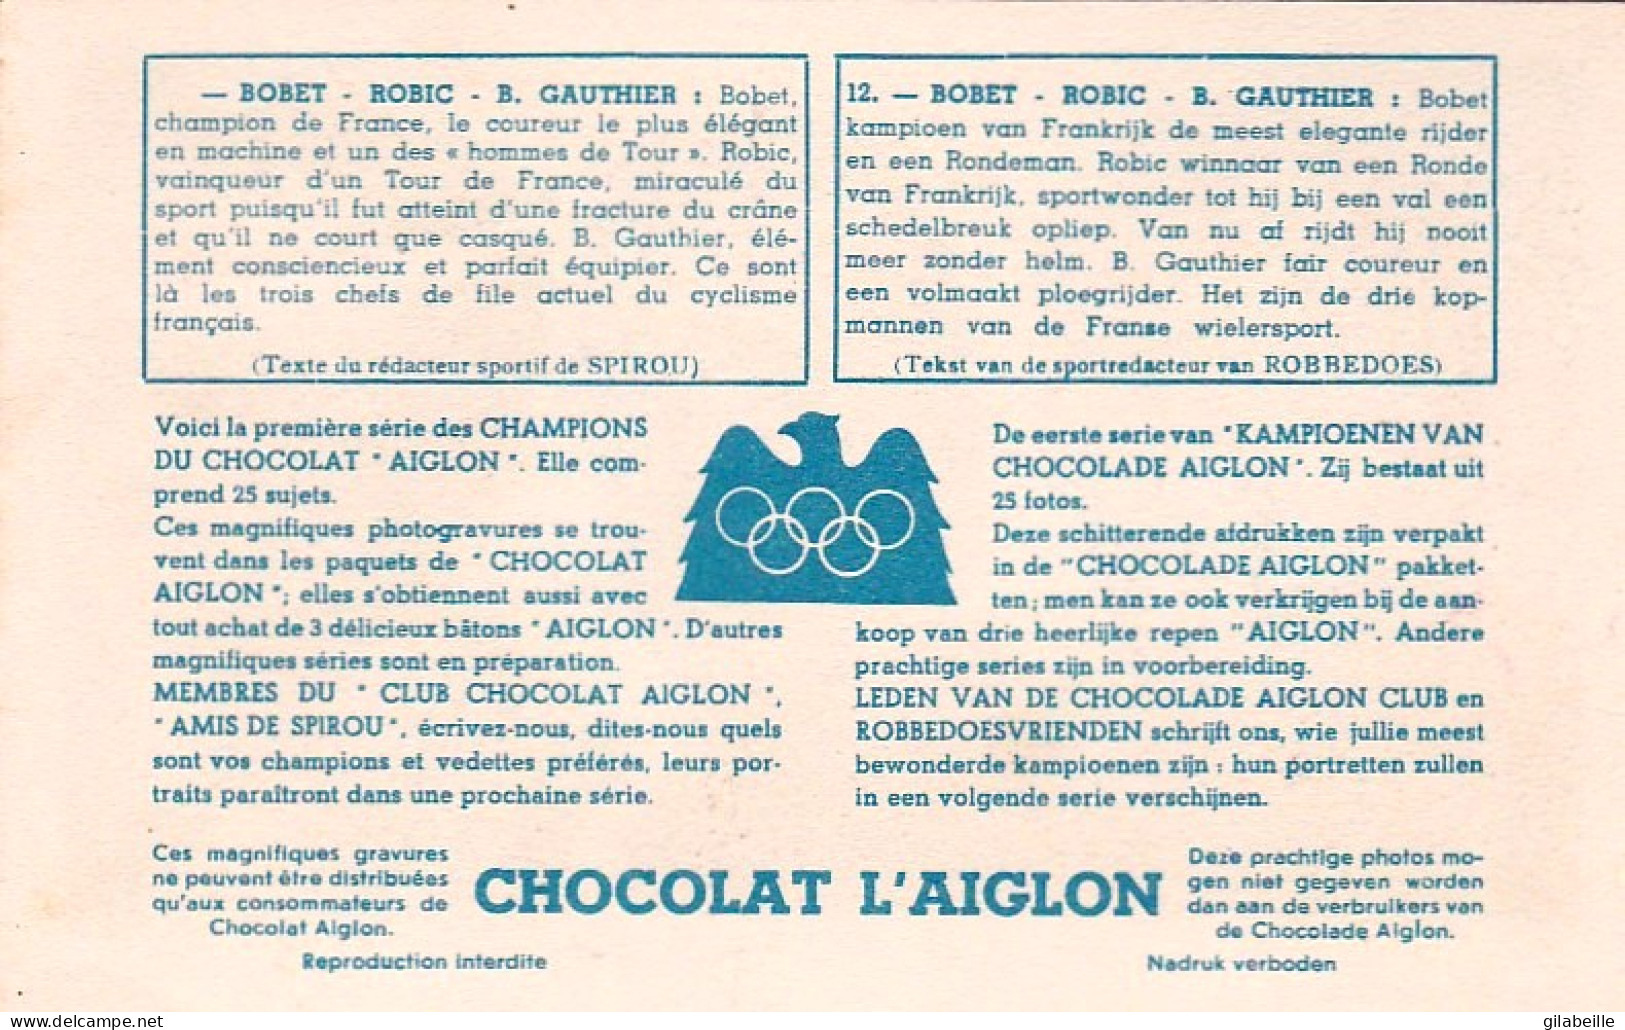 Chromo - Chocolat Aiglon - Cyclisme - Wielrenners - Cyclistes - B. GAUTHIER - BOBET - ROBIC - Wielrennen